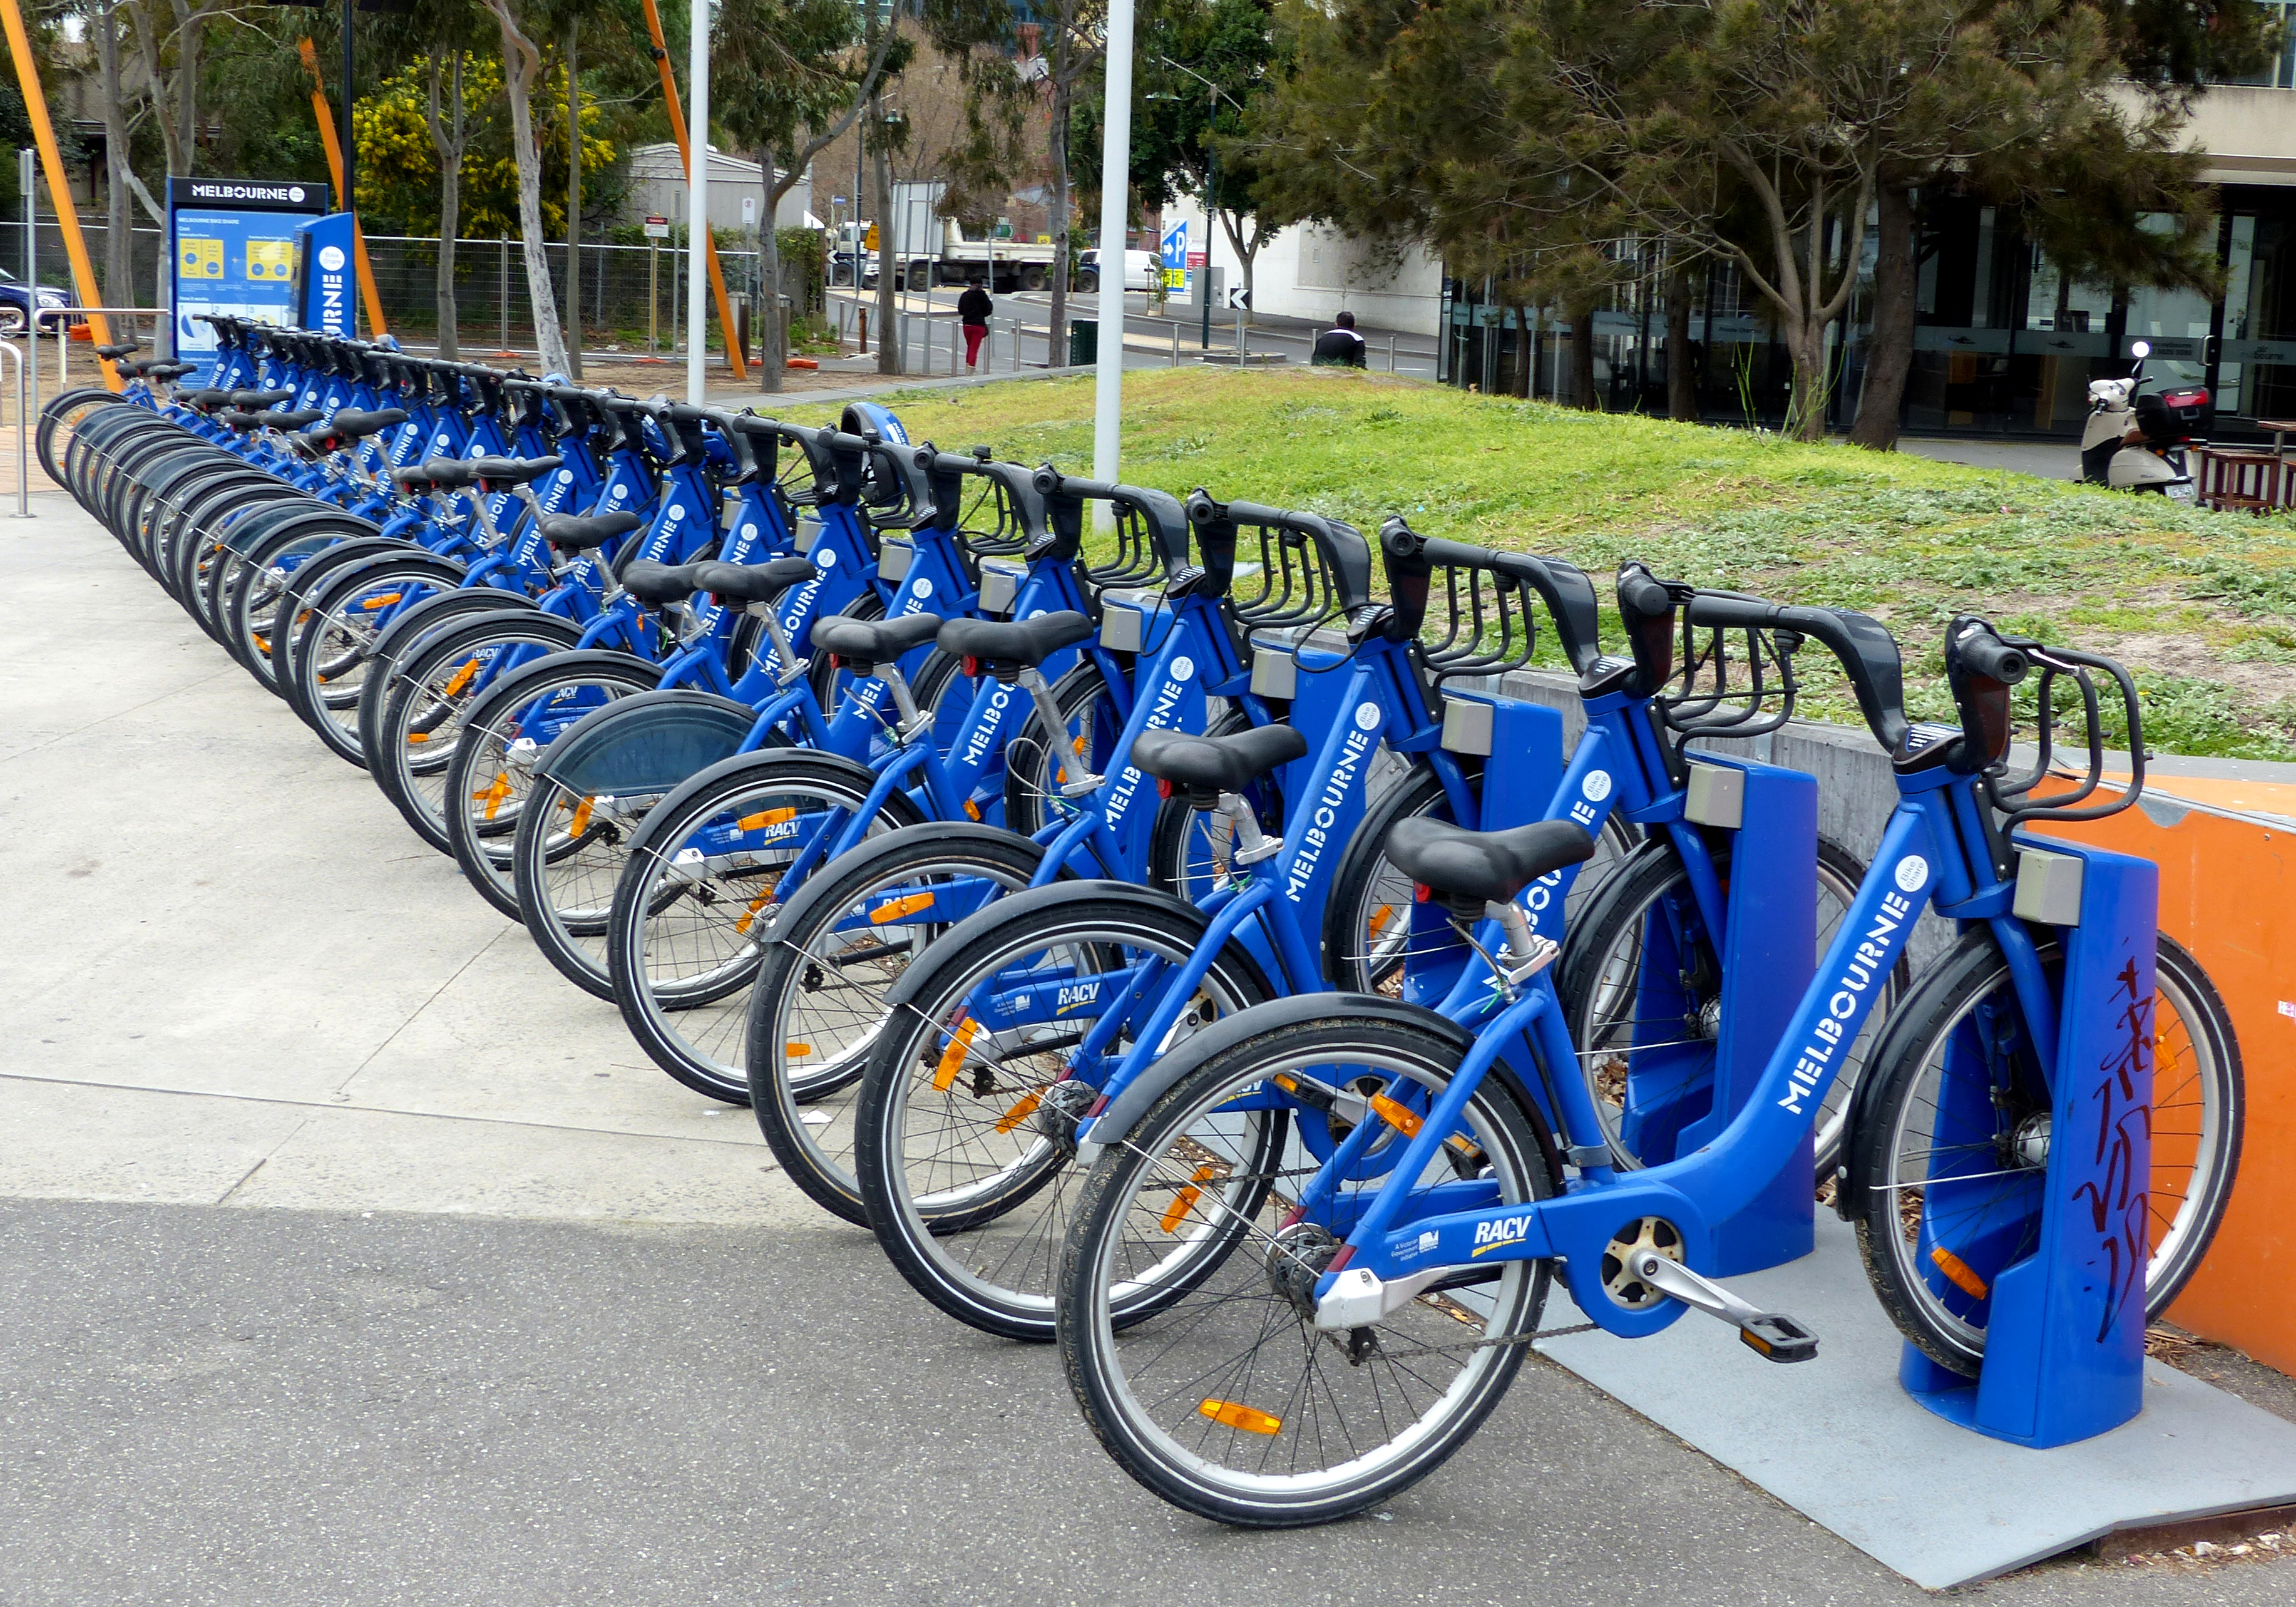 Melbourne bike share (mbs) photo